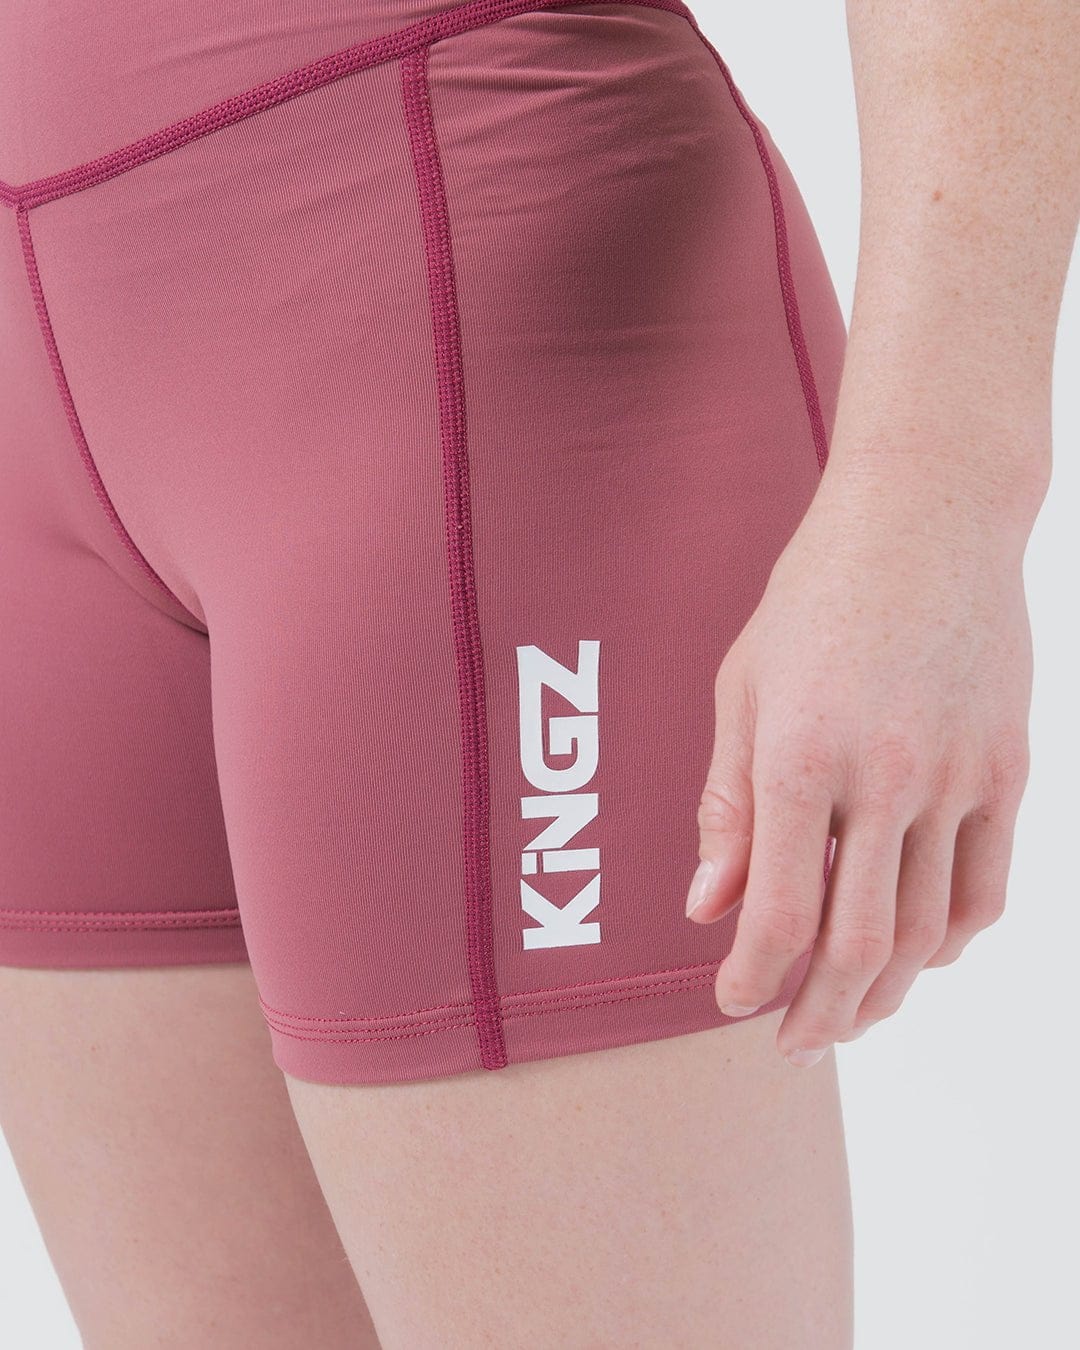 Kingz Kore Women's Training Shorts - Rot